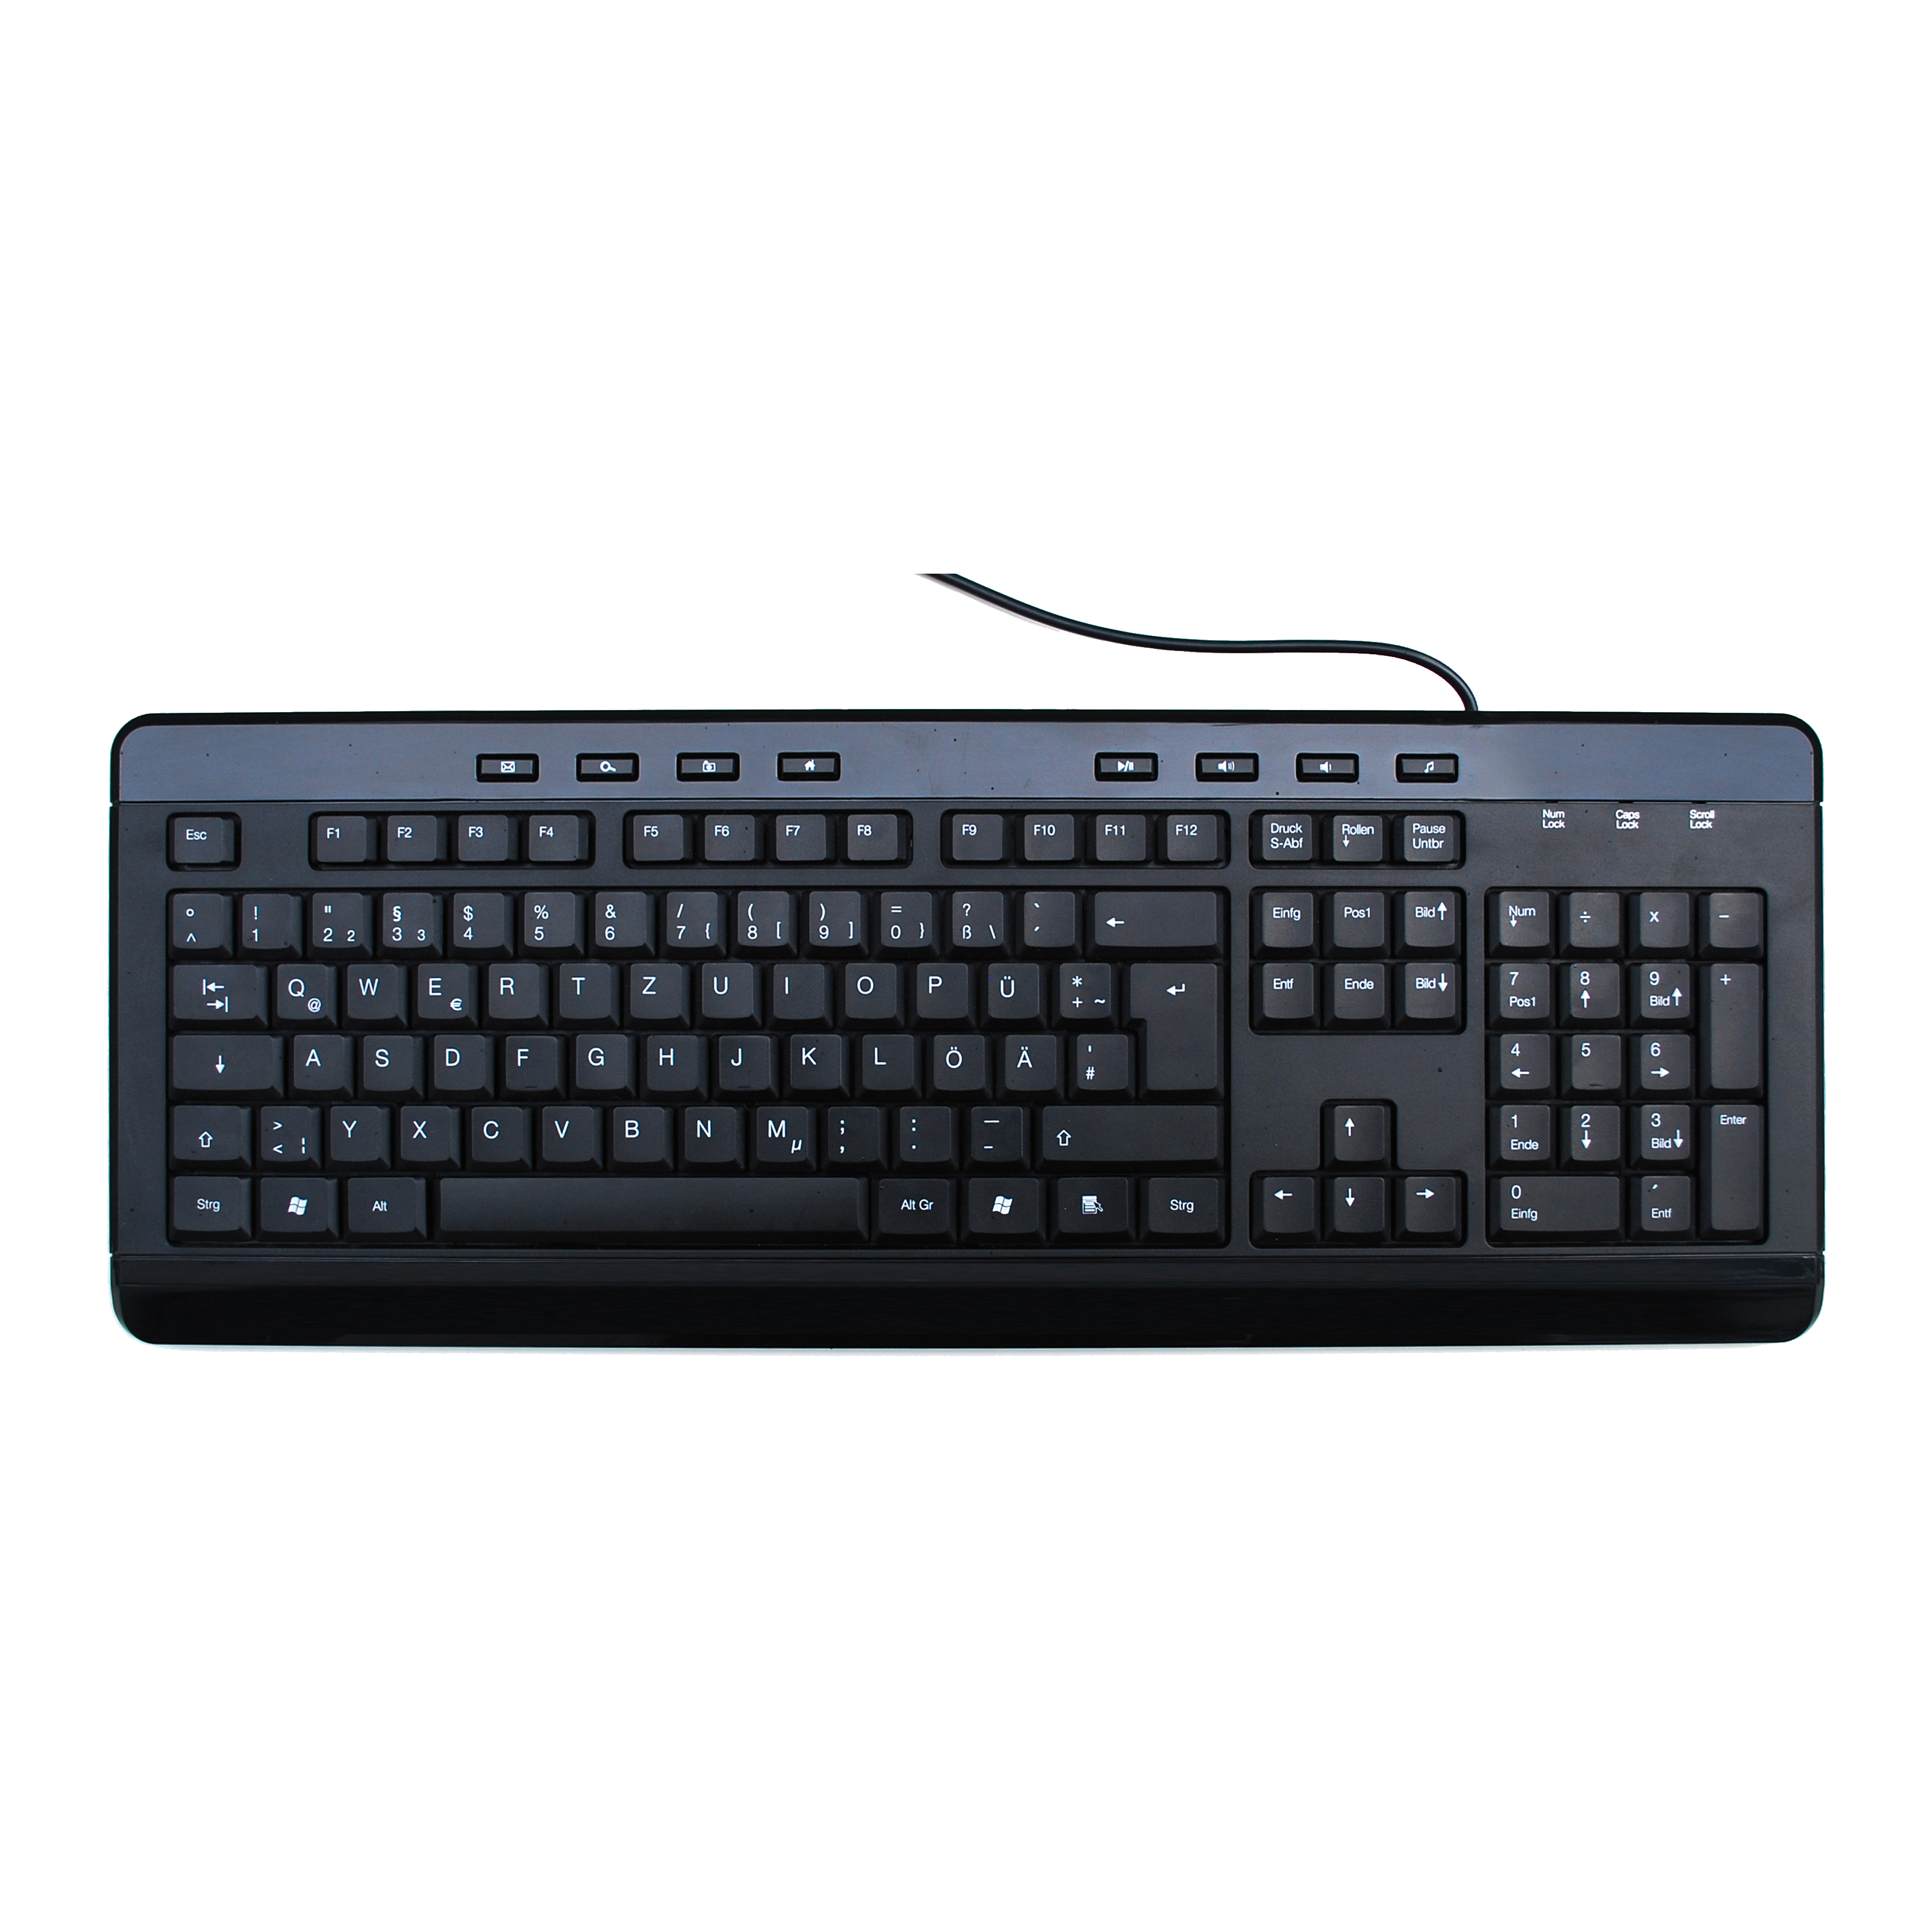 MEDIARANGE MROS102 - Tastatur - USB - Schwarz